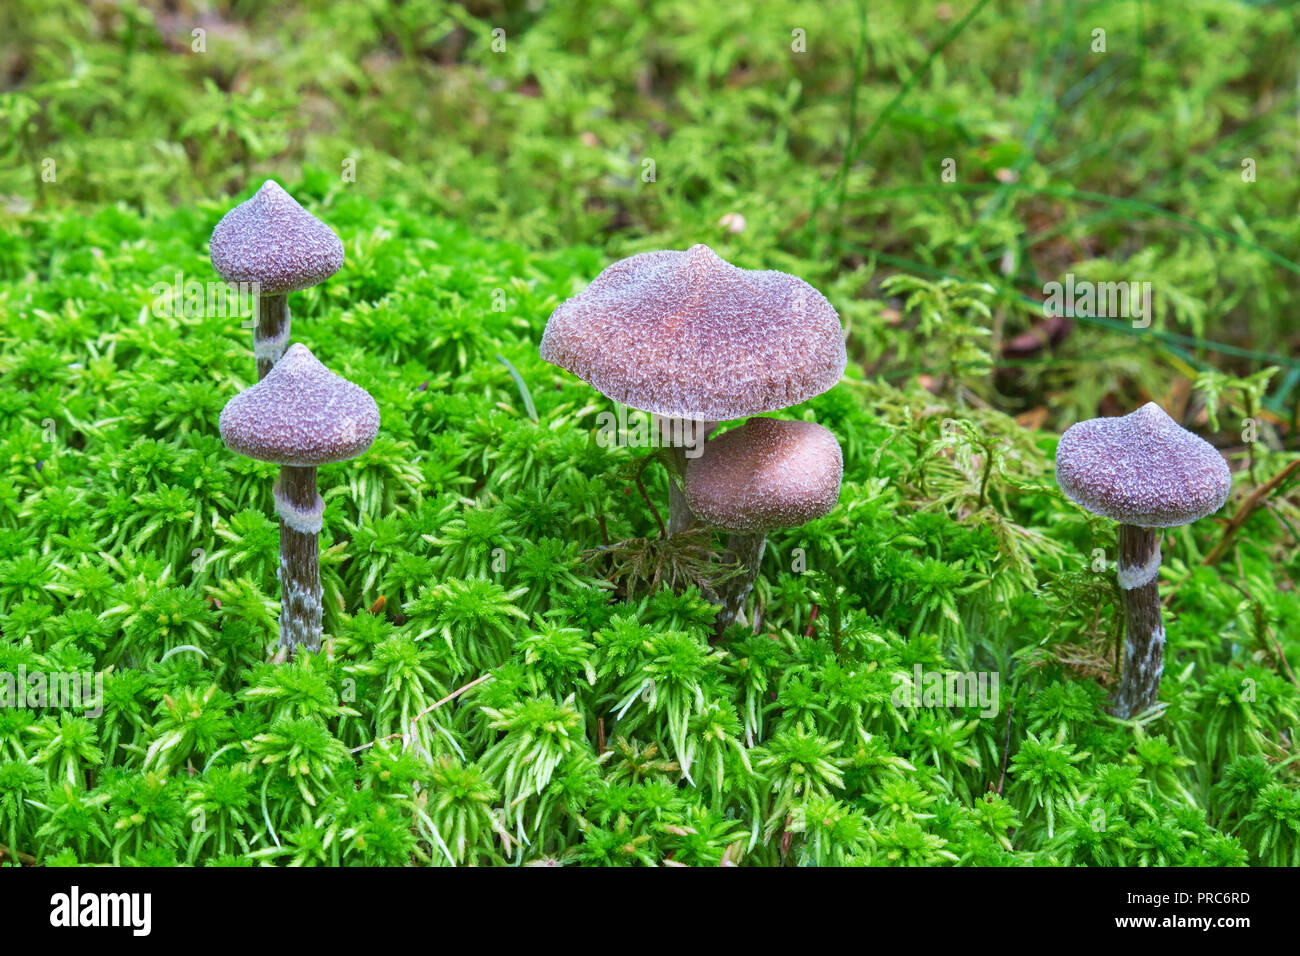 Mushrooms Cortinarius paleiferus growing in the moss Stock Photo